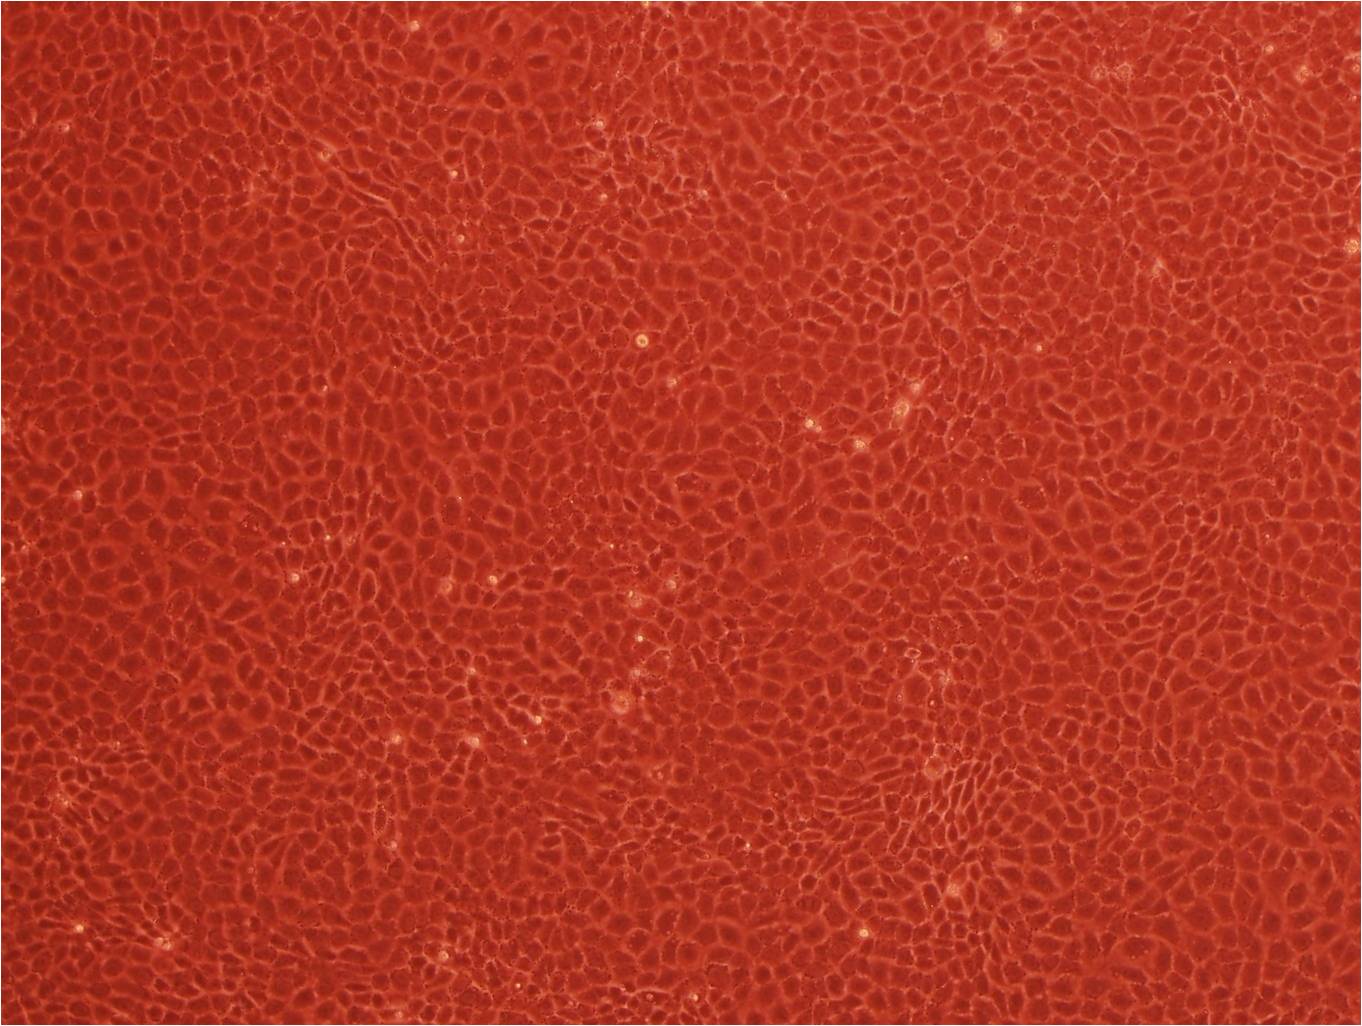 NCI-H1048 Cell|人小细胞肺癌细胞